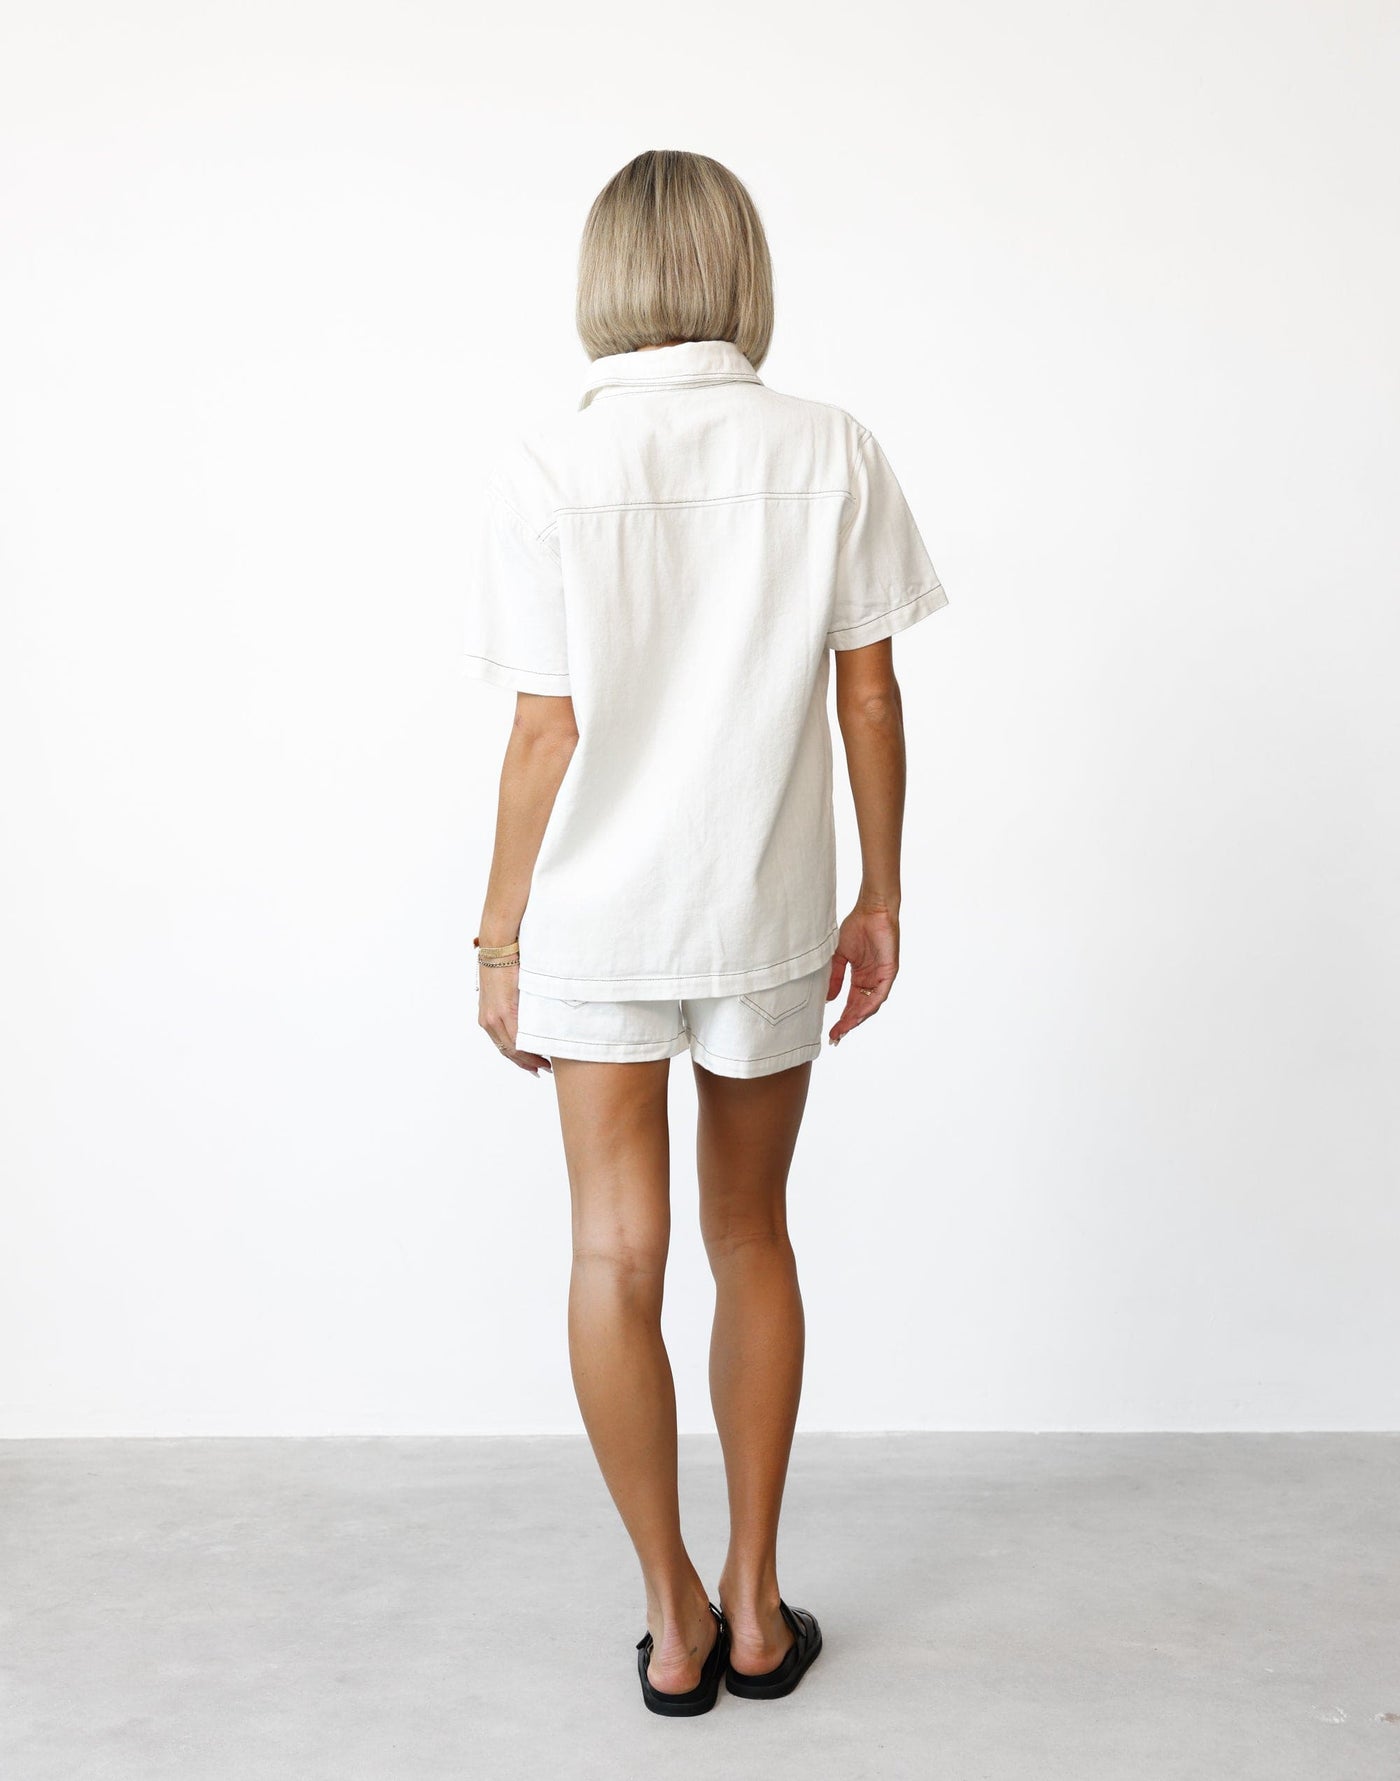 Elizha Shirt (White) - Button Up Pocket Detail Shirt - Women's Top - Charcoal Clothing